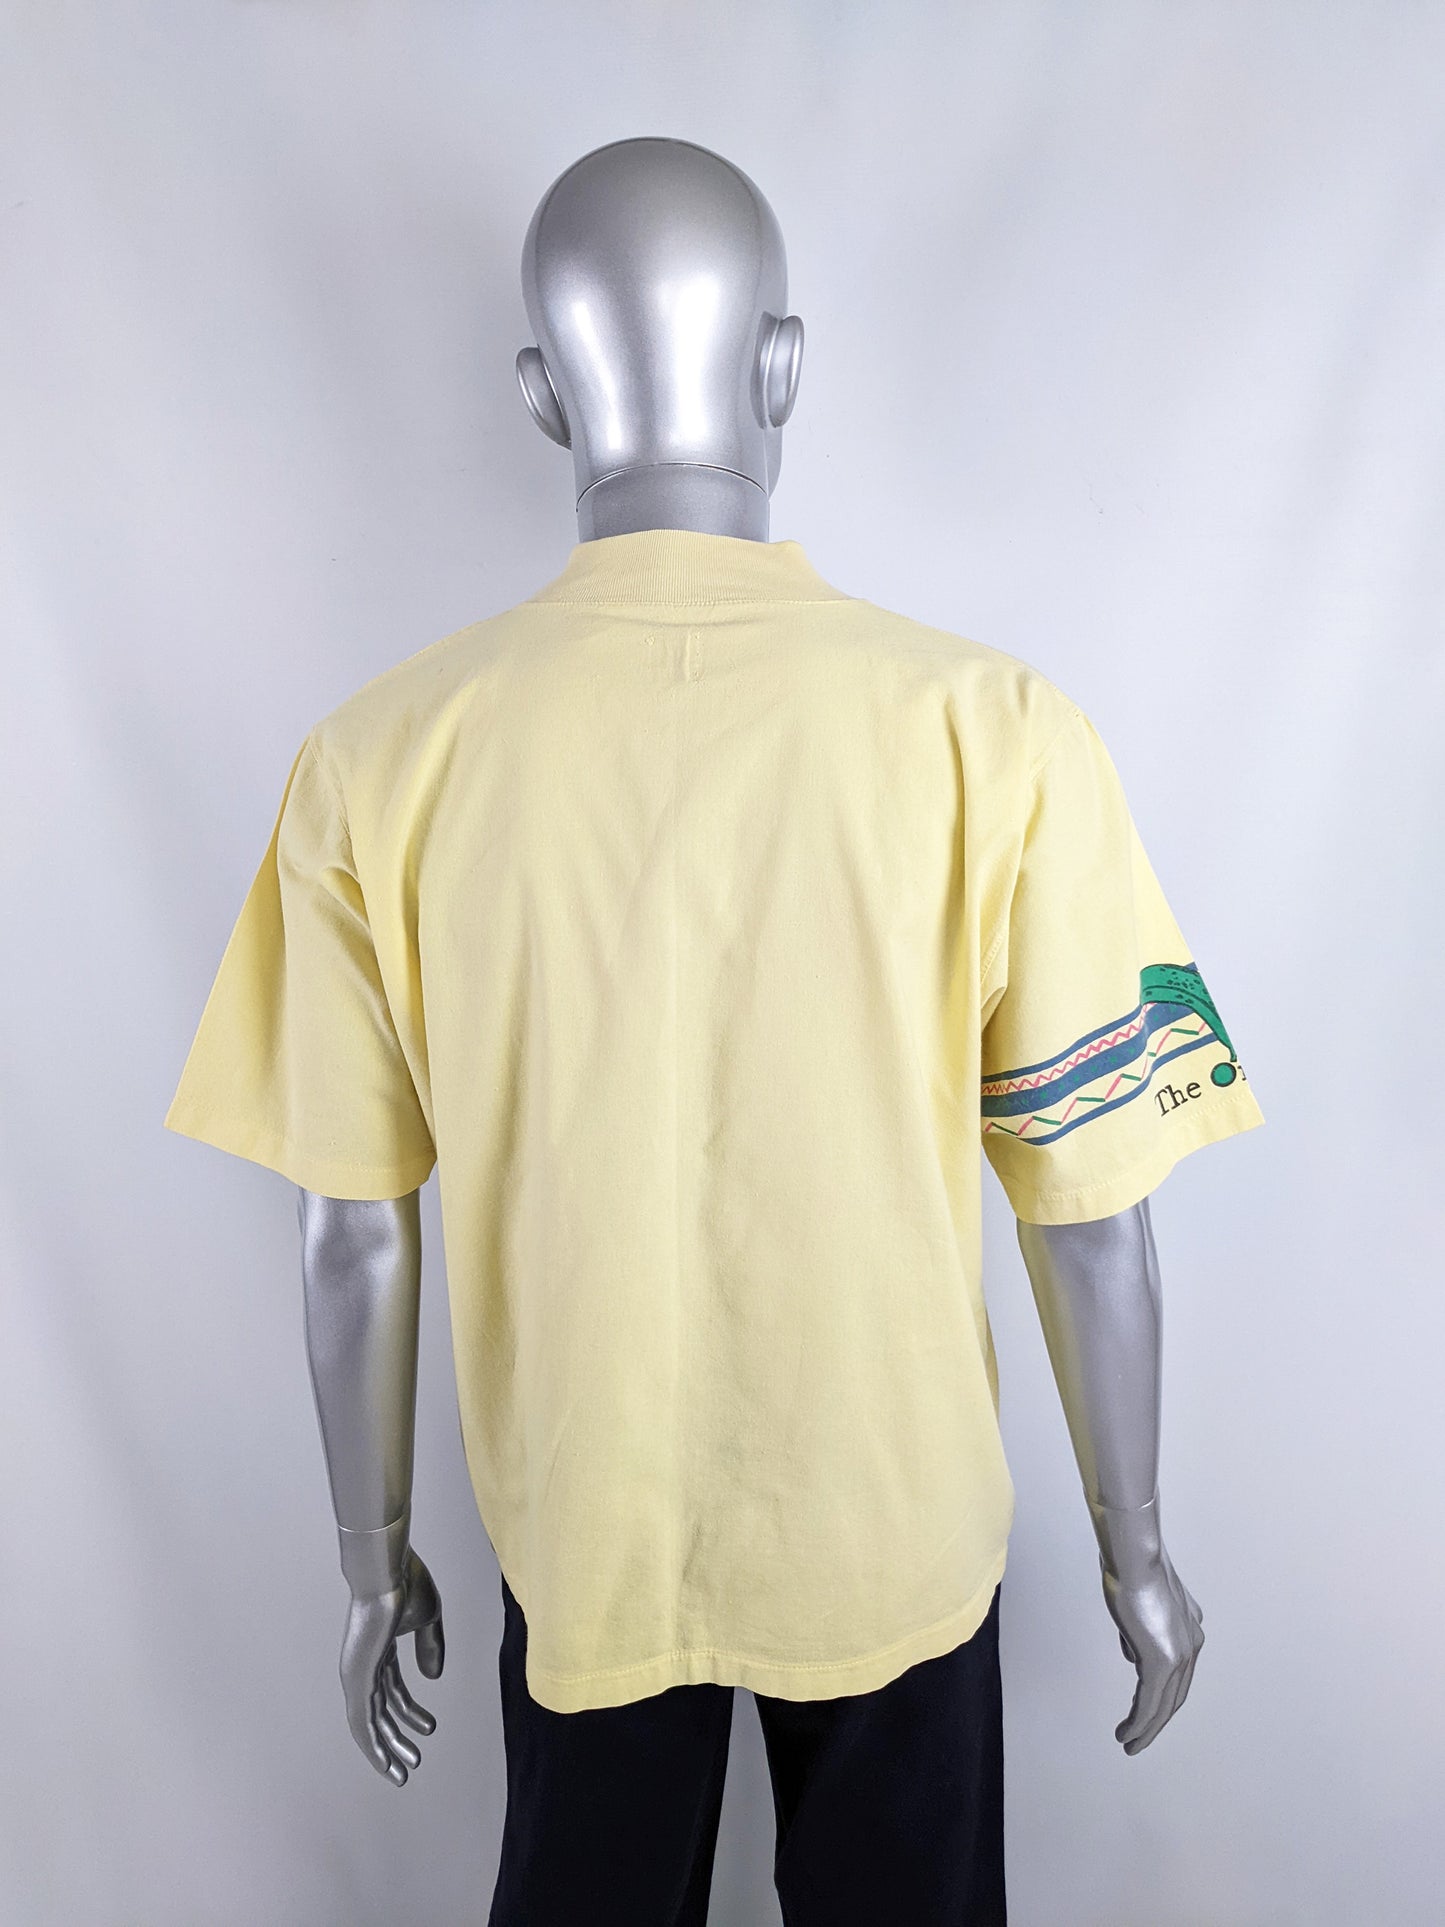 Ton Sur Ton Vintage Mens Pastel Yellow Banana T Shirt, 1980s